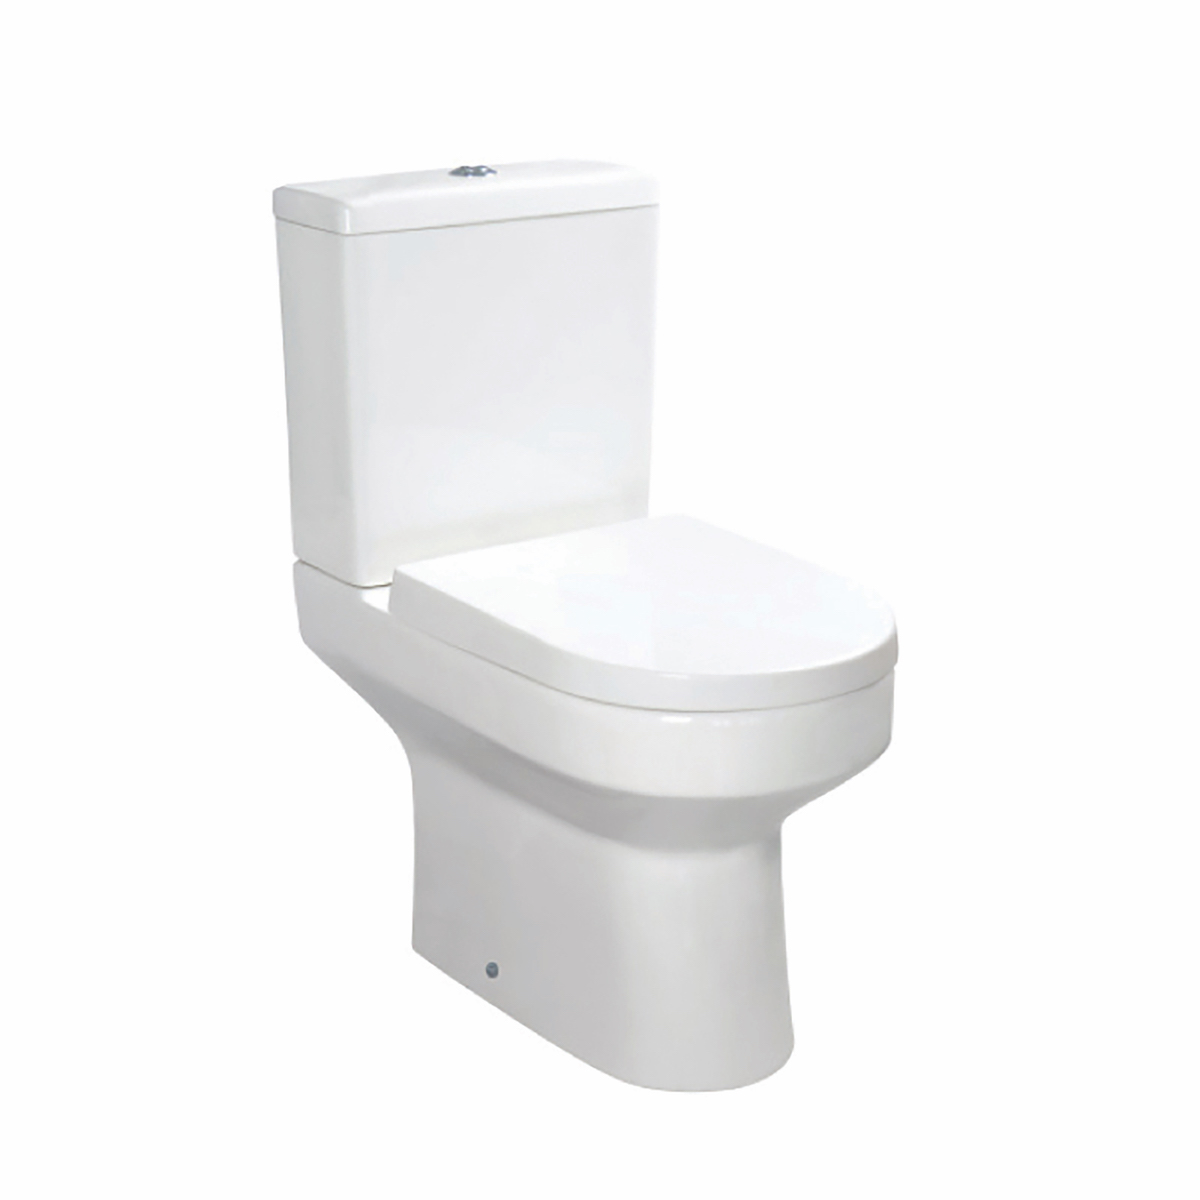 Spa Comfort Height Rimless Pan, Cistern & Seat